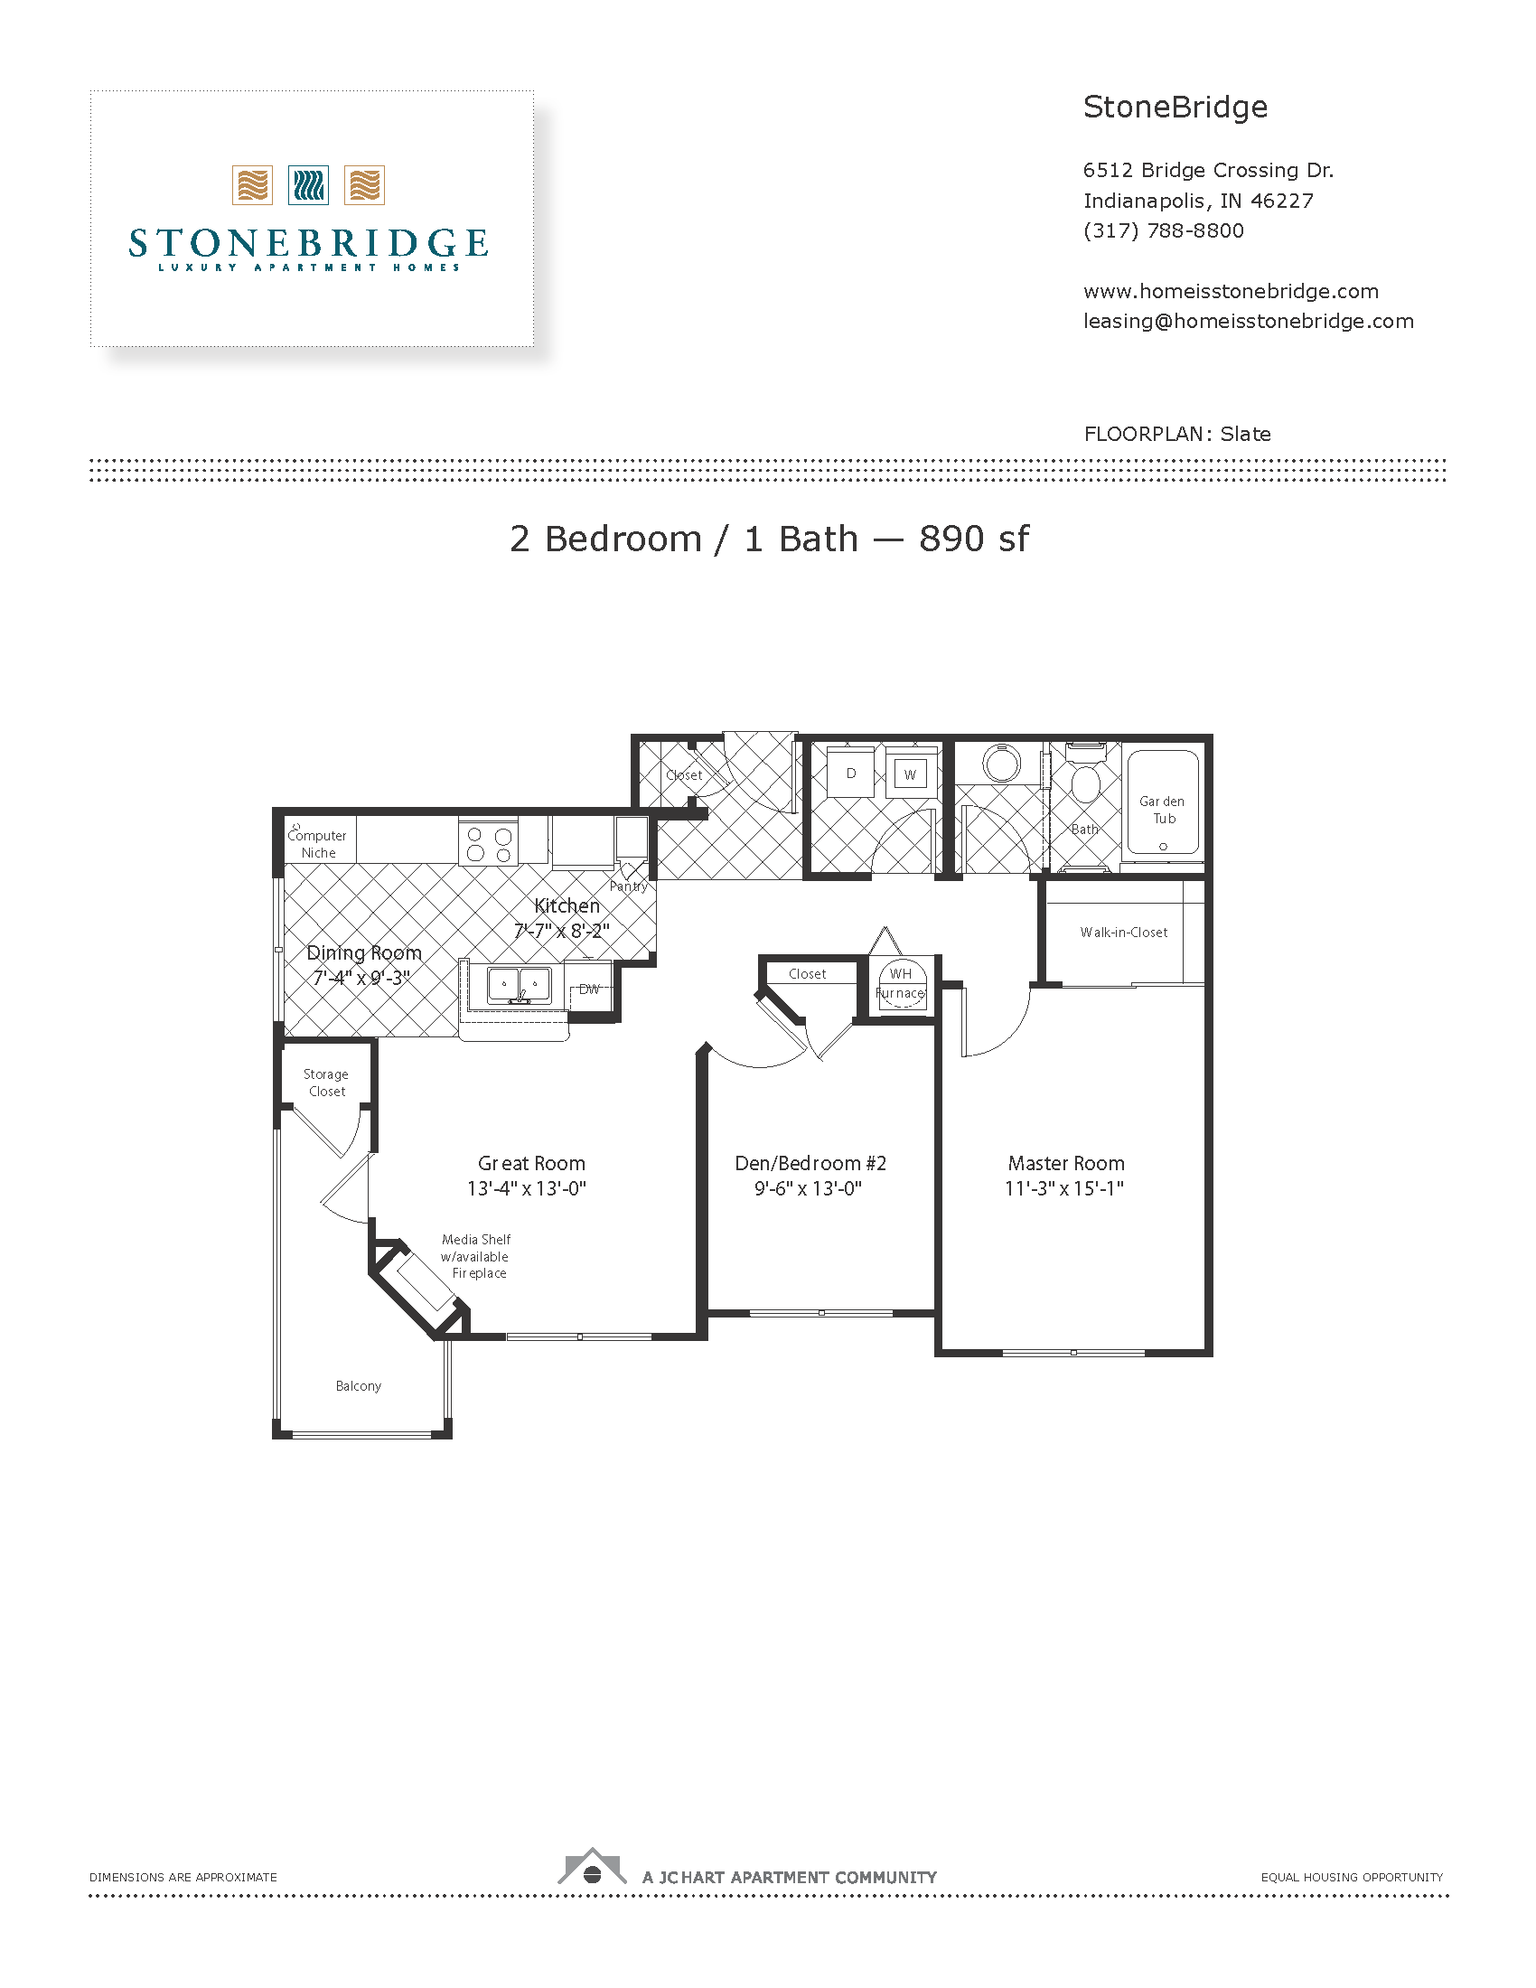 Slate floor plan - StoneBridge Apartment Homes _ Indianapolis apartments_preview.png